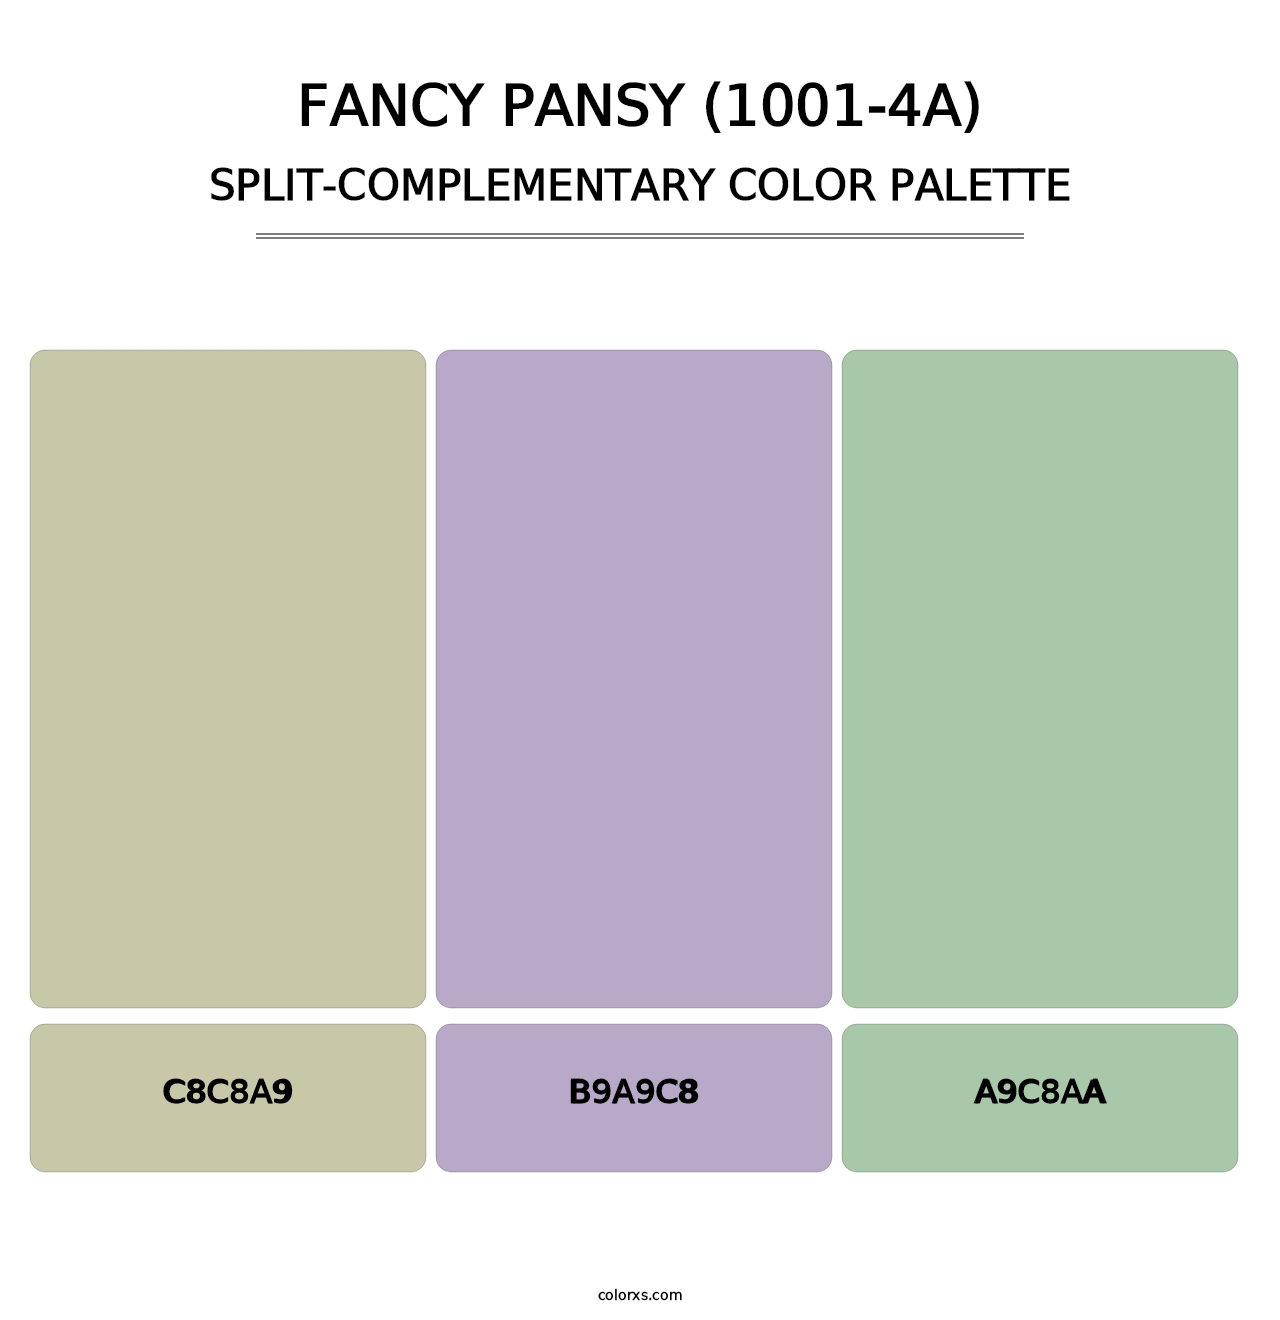 Fancy Pansy (1001-4A) - Split-Complementary Color Palette